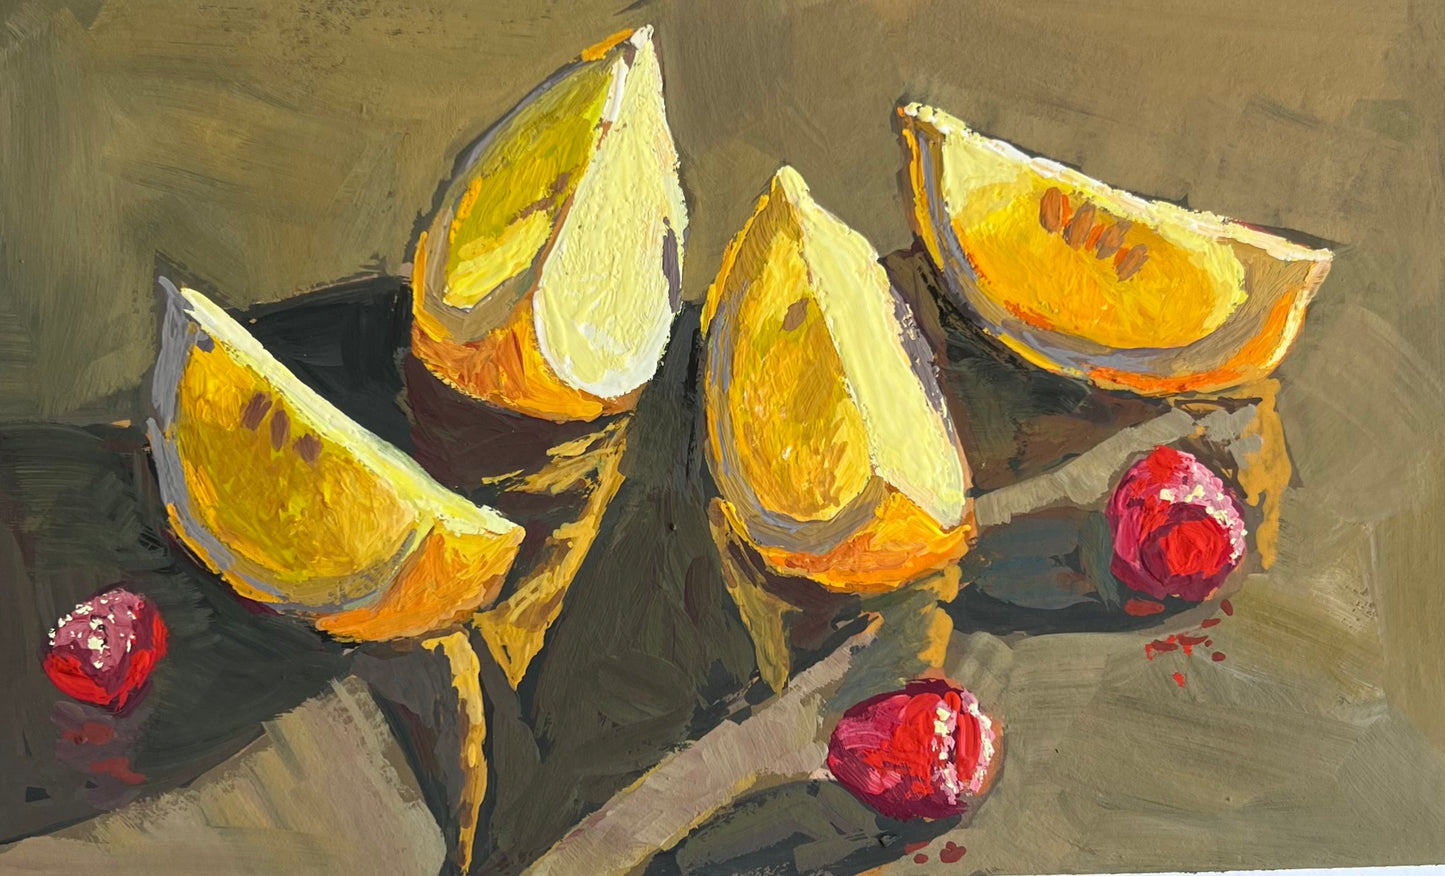 Lemon Slices in the sun 2 - Small Still Life Gouache Painting